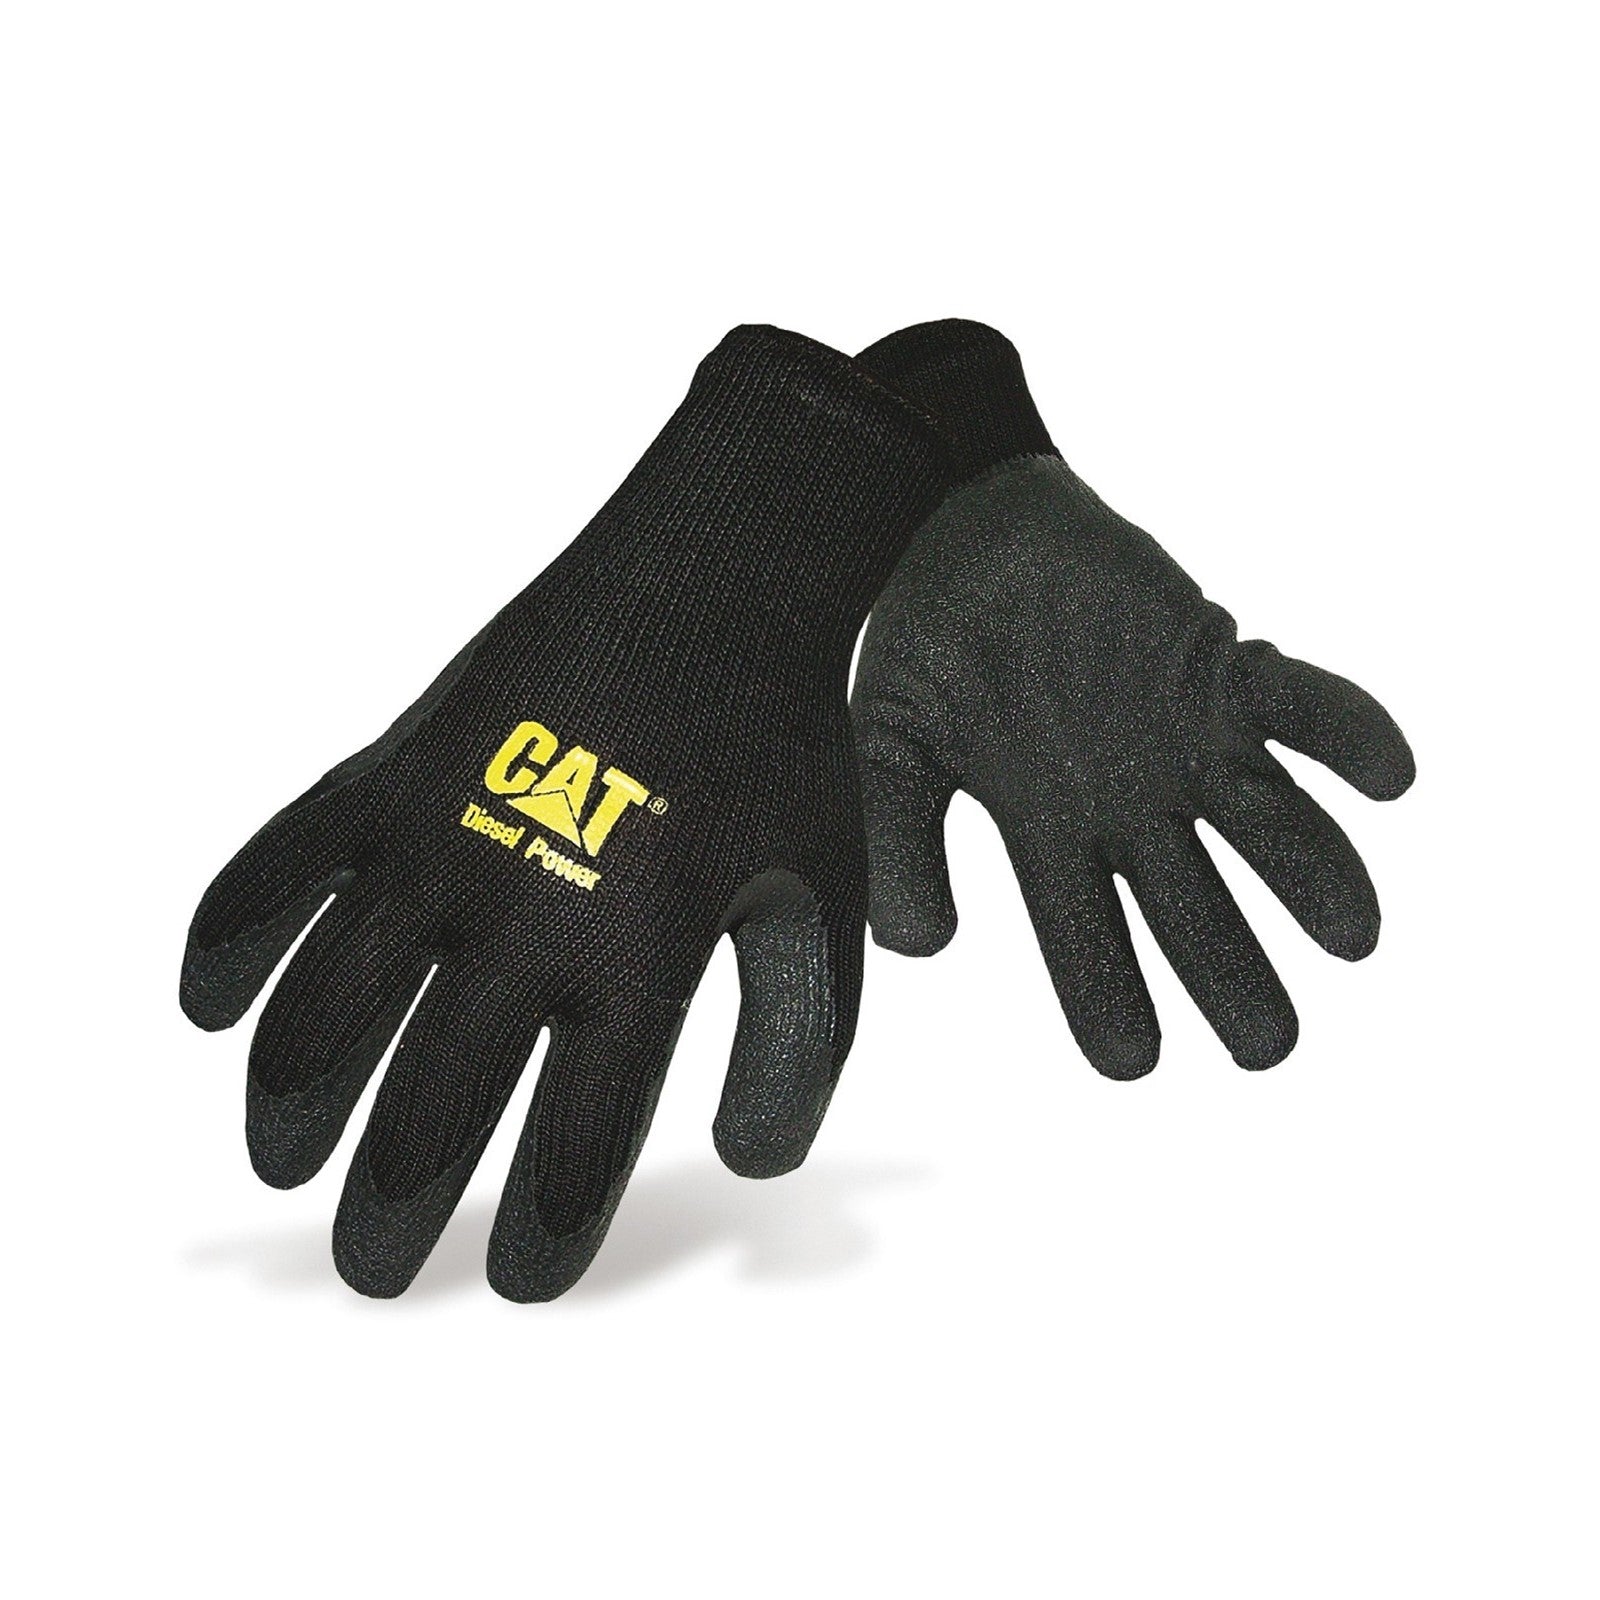 Caterpillar Thermal Gripster Glove